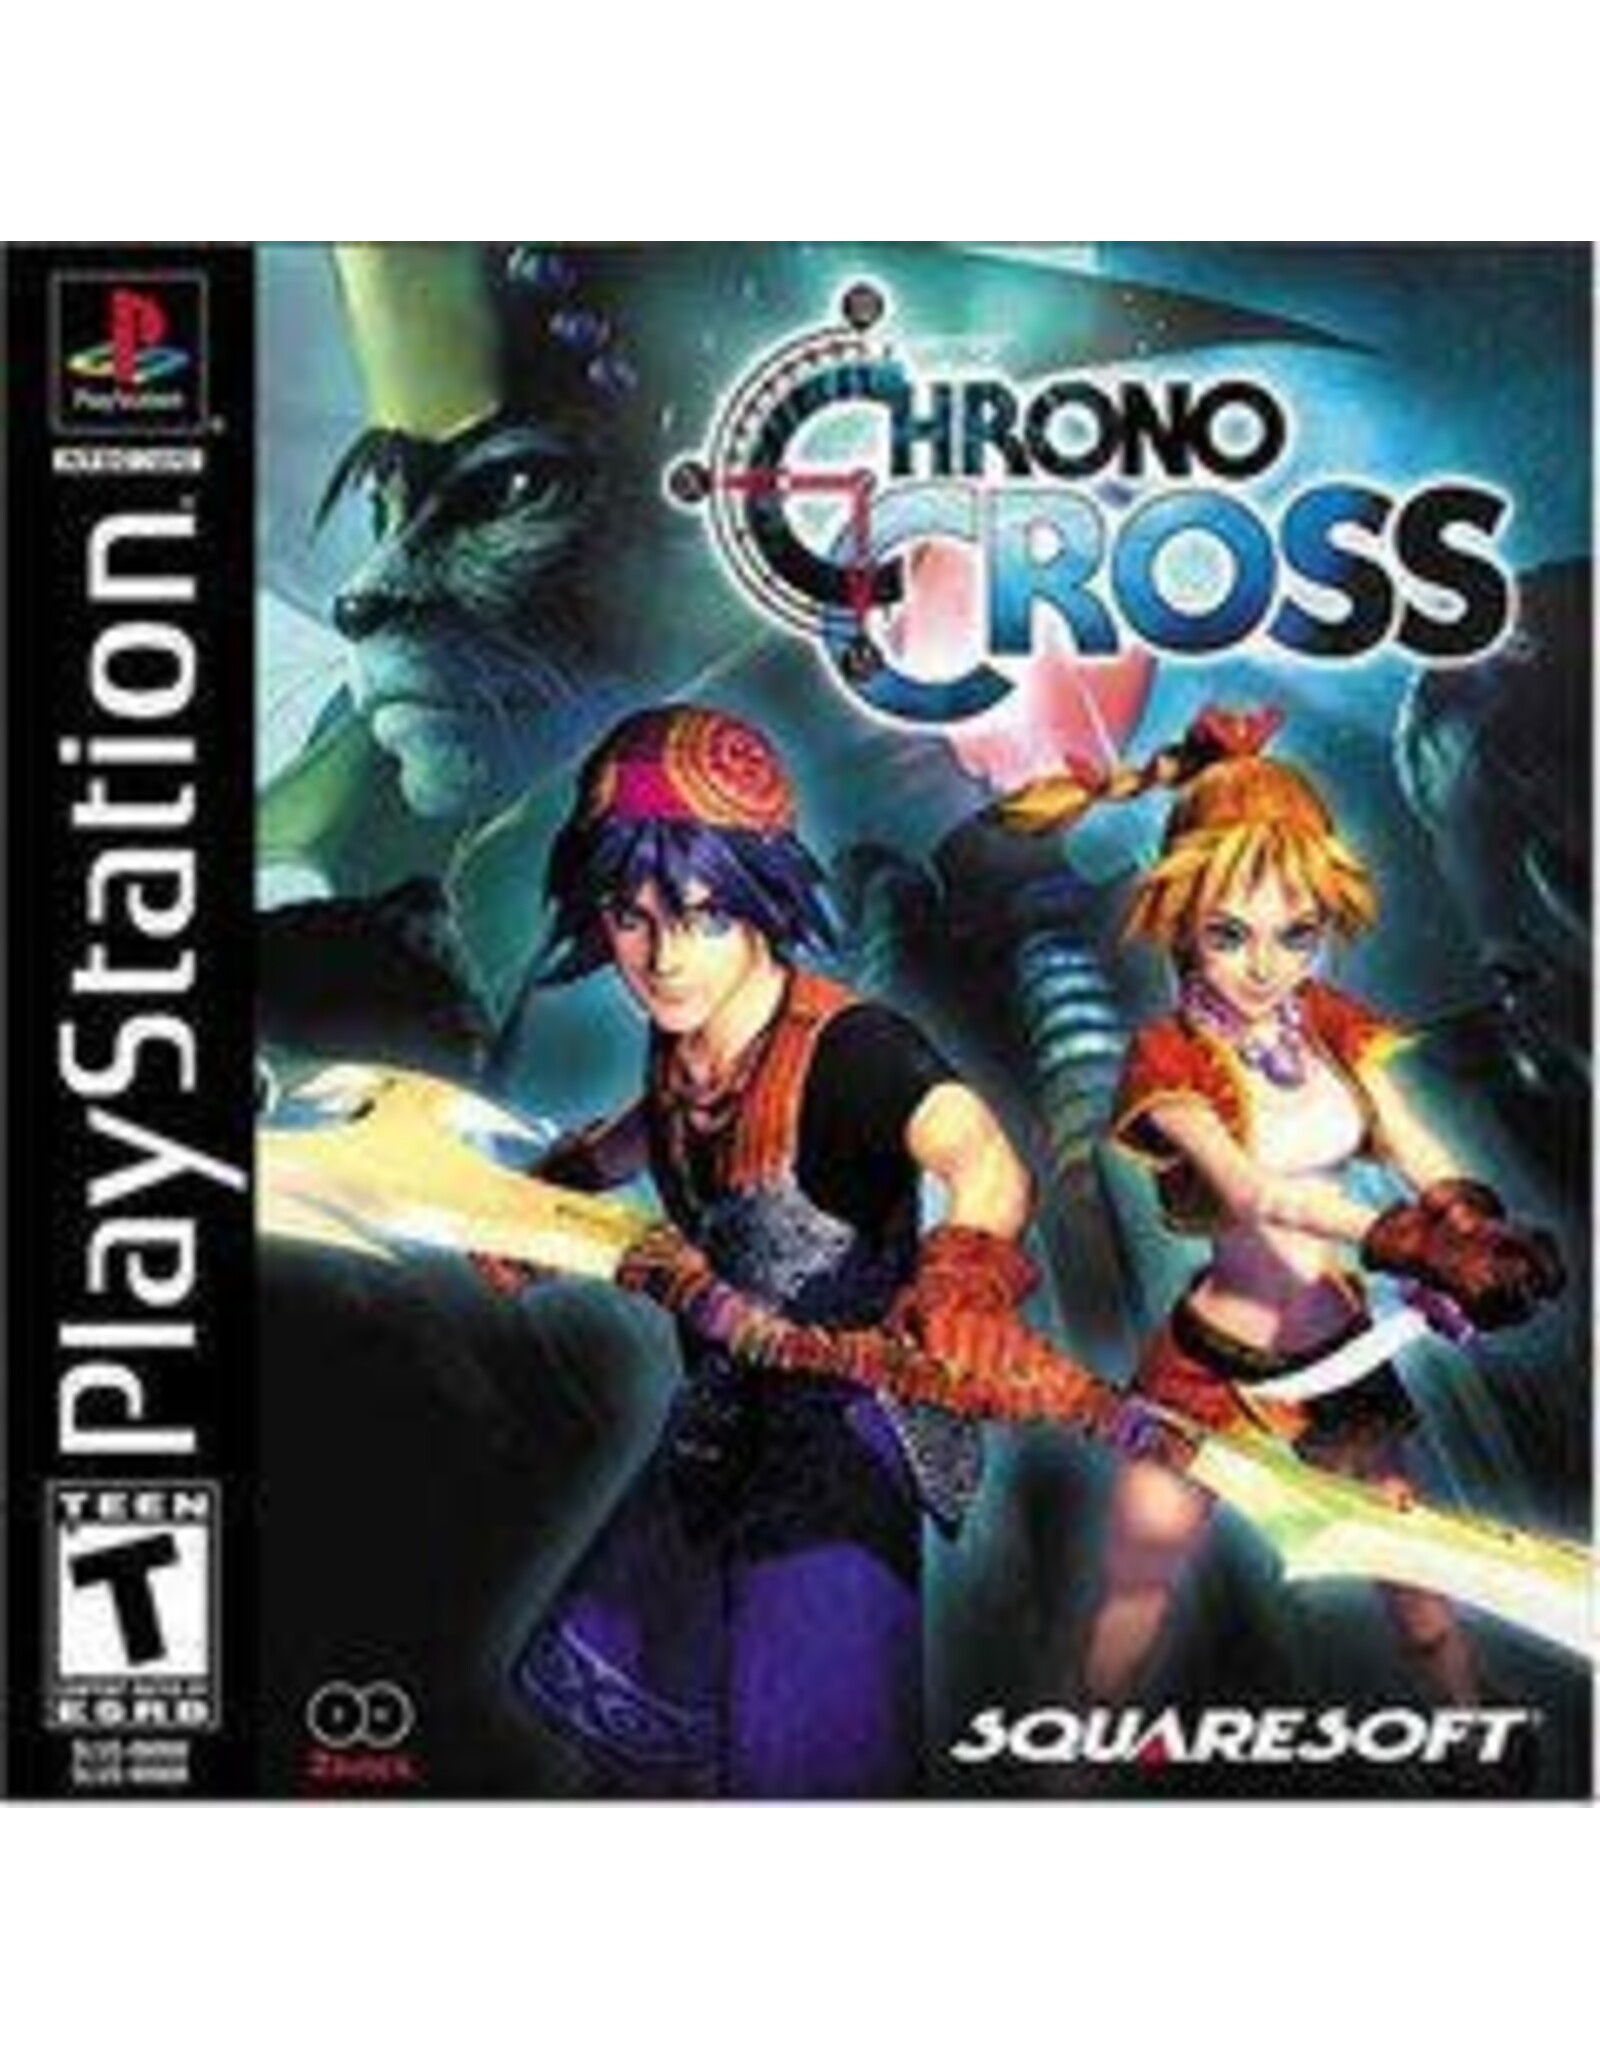 Playstation Chrono Cross (CiB with Registration Card)